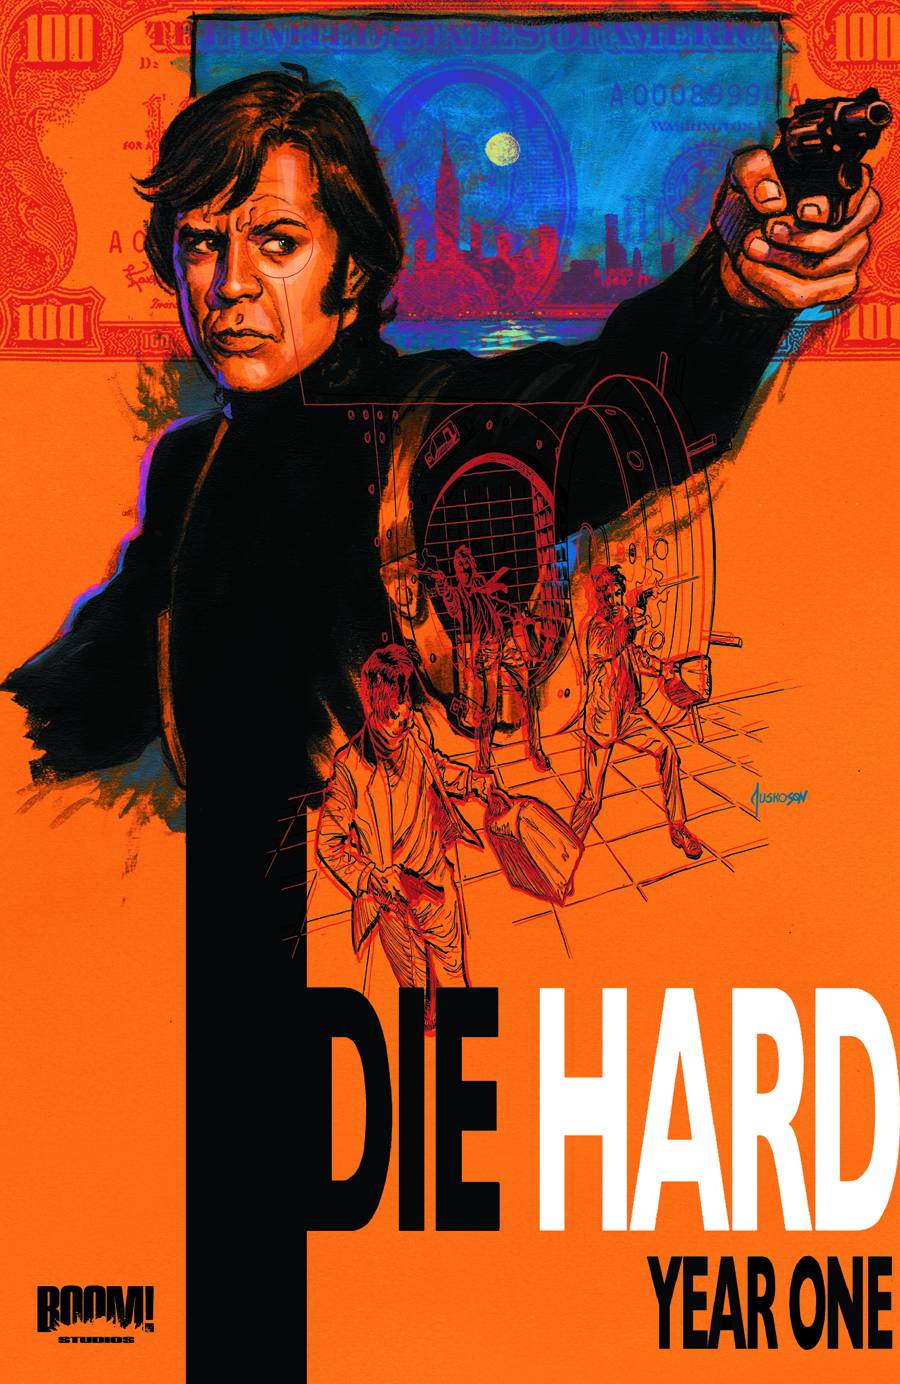 Die Hard Year One Vol 2 Fresh Comics